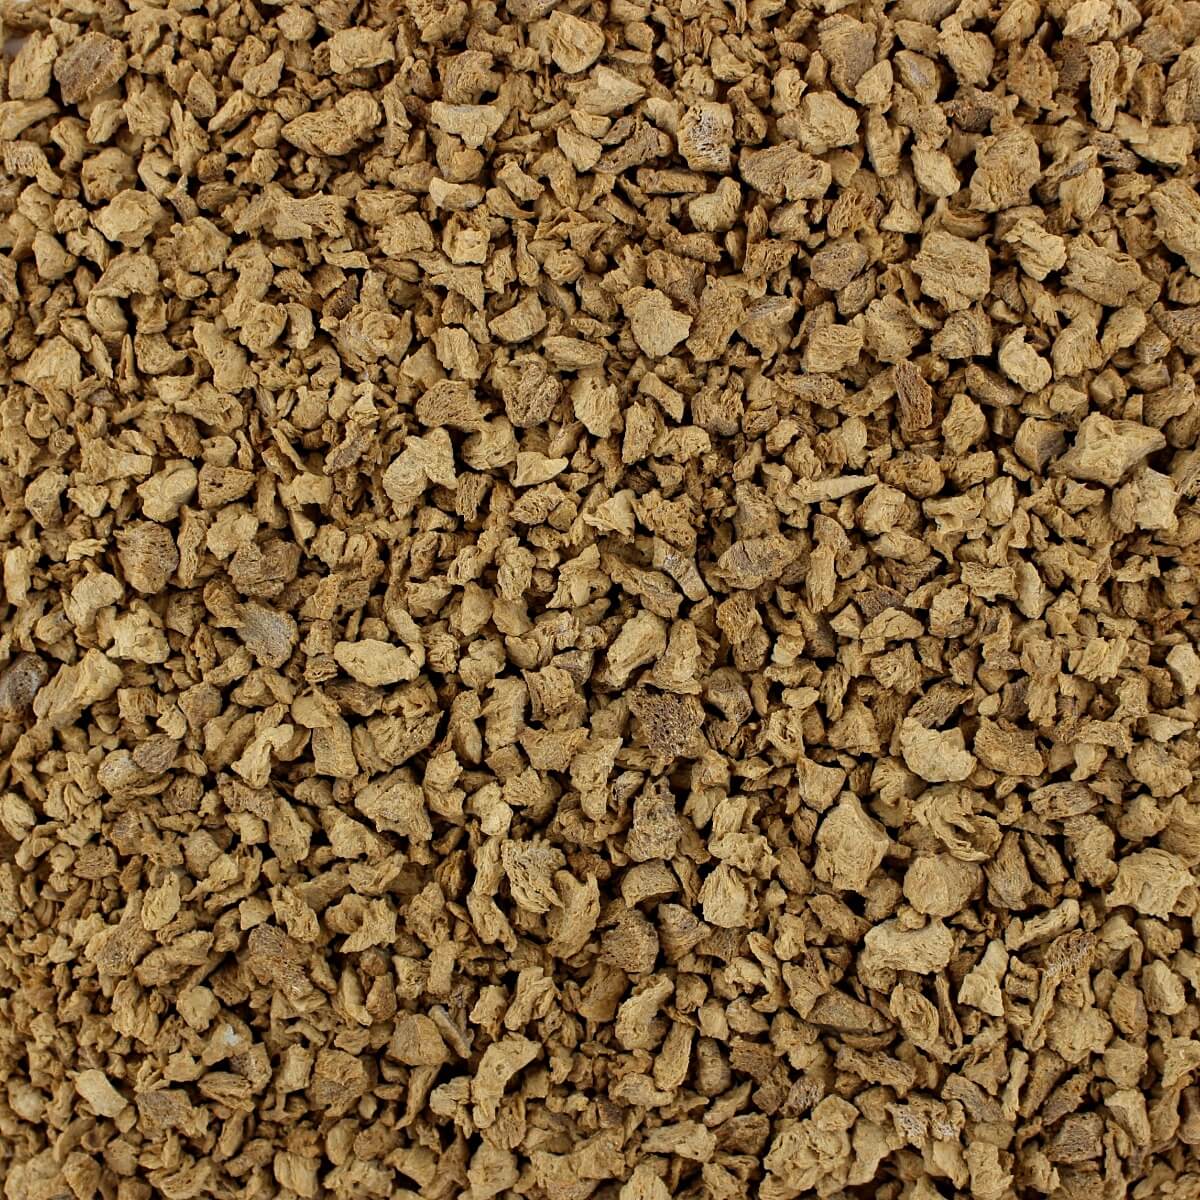 Keywords: Gravel, brown.

Modified Description: A close up of a pile of brown gravel.